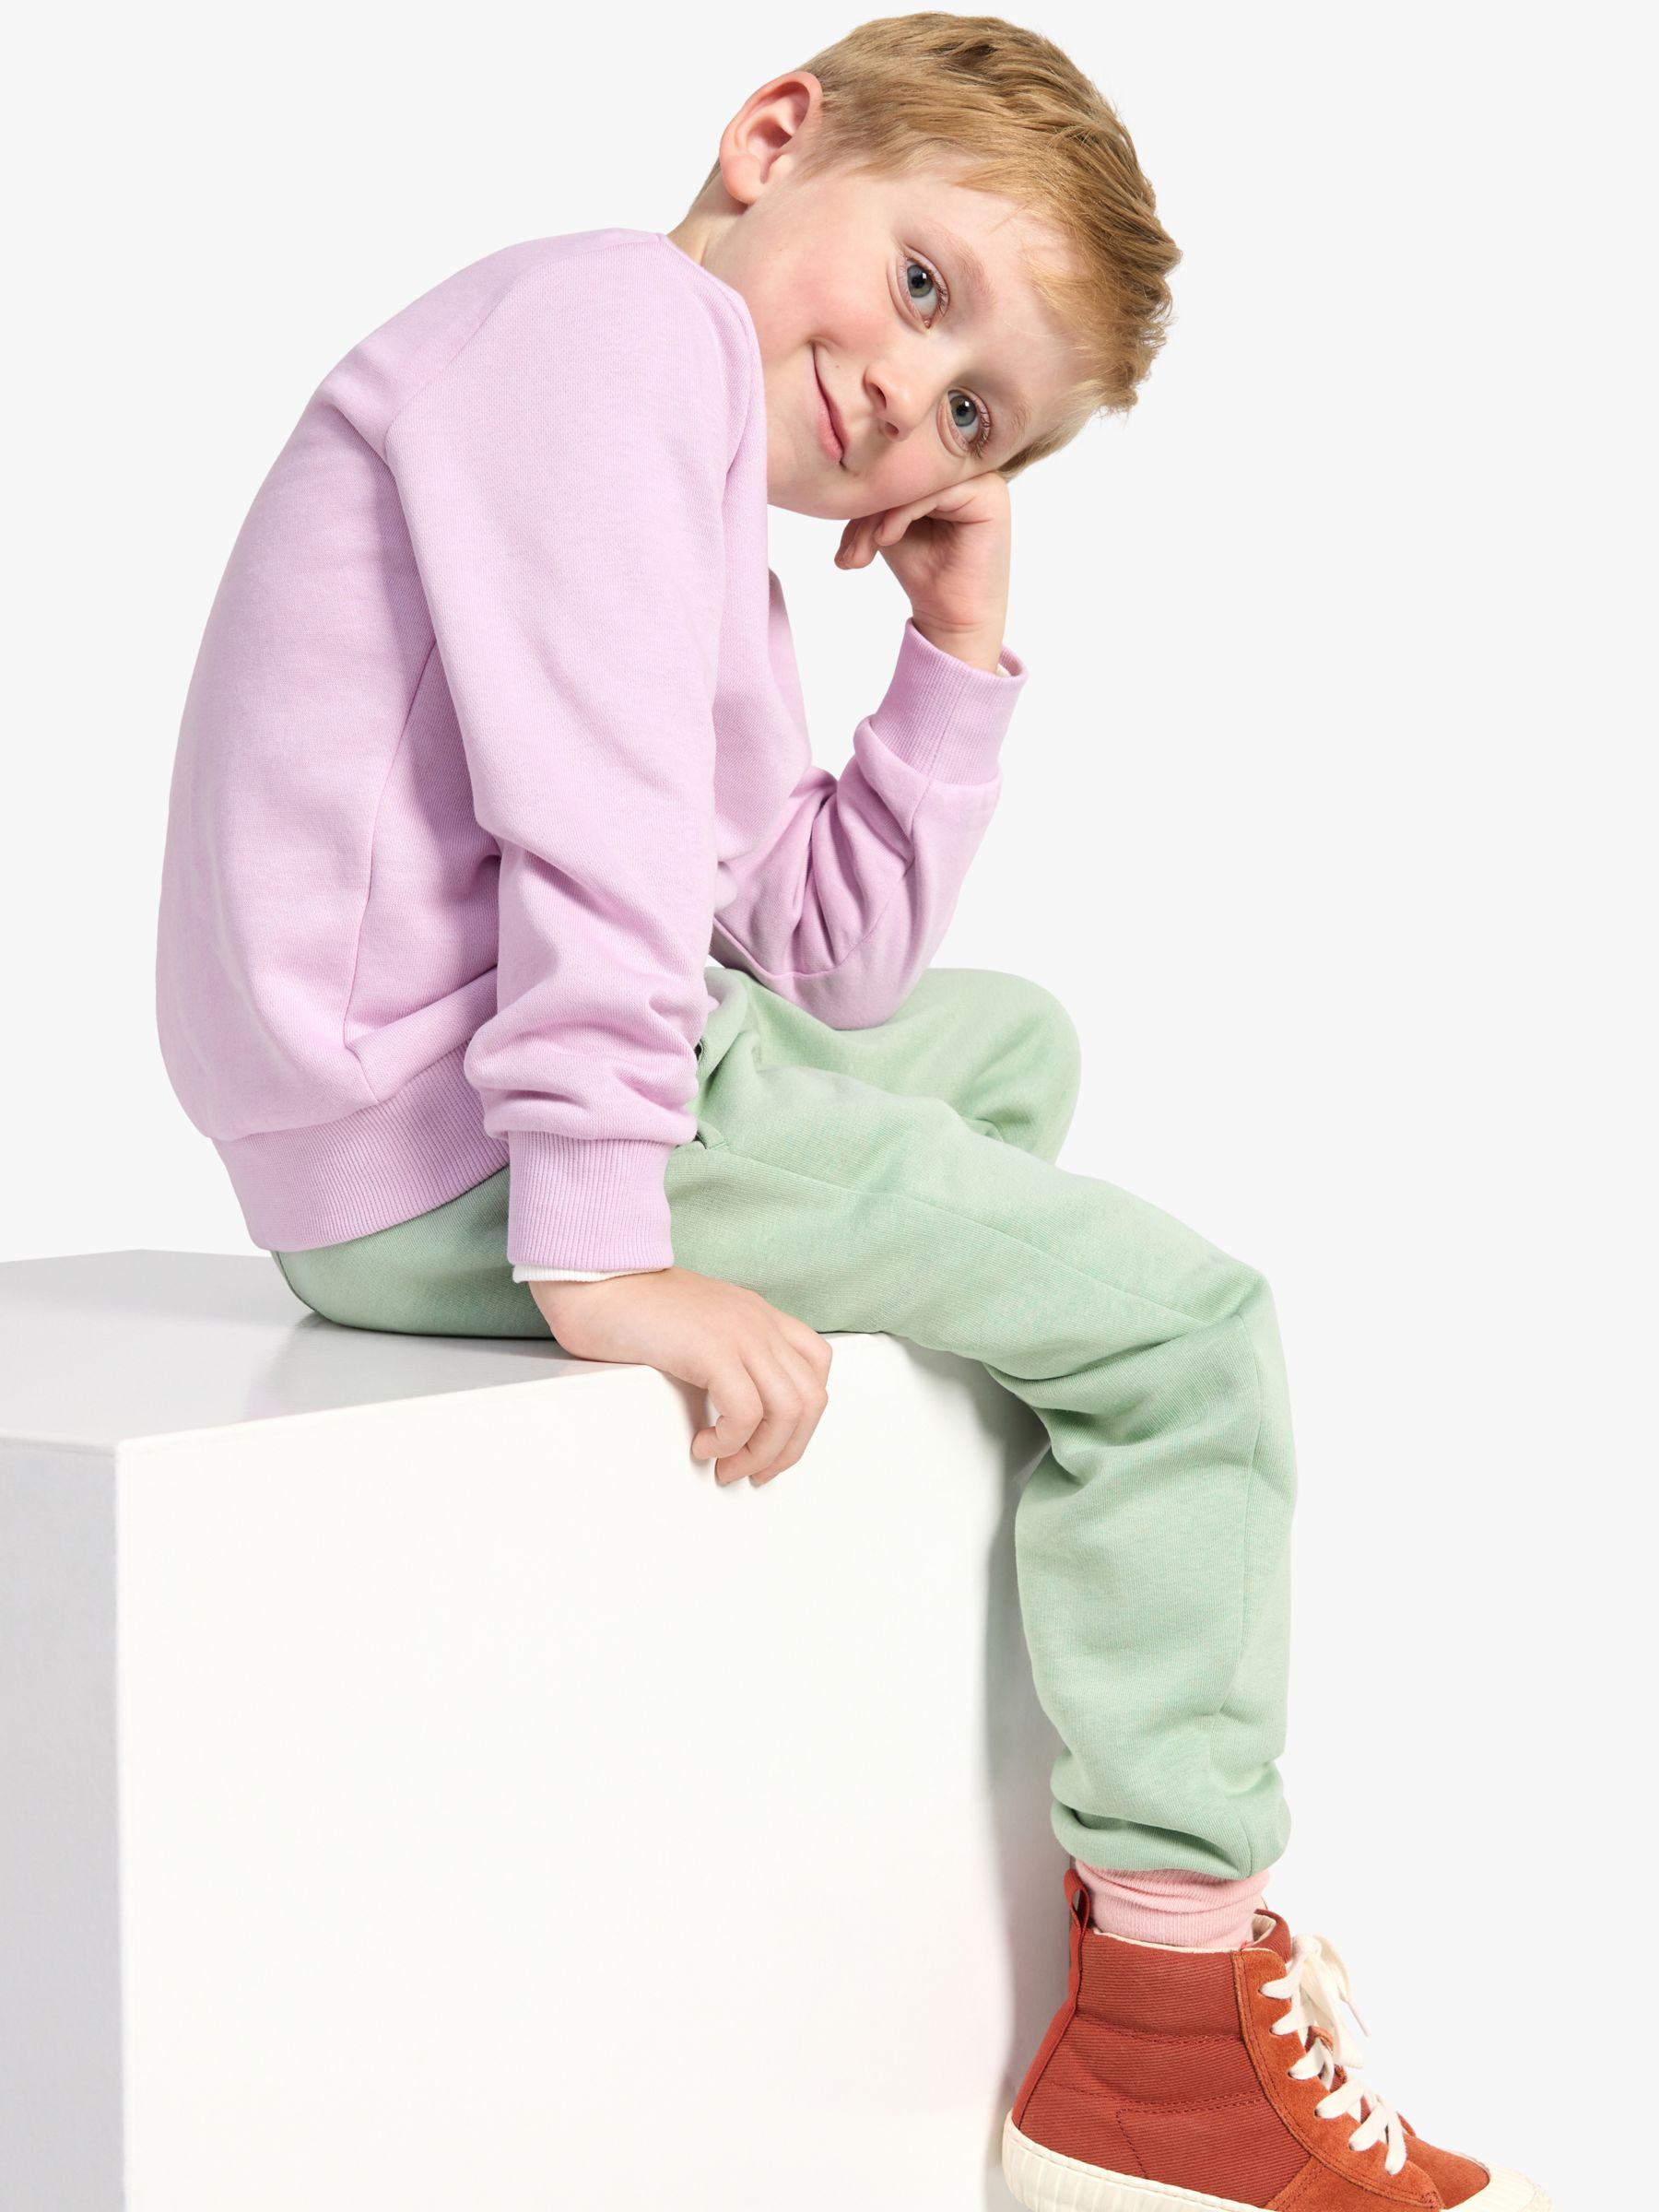 Lindex Kids' Soft Basic Organic Cotton Blend Sweatshirt, Light Lilac, 18-24 months